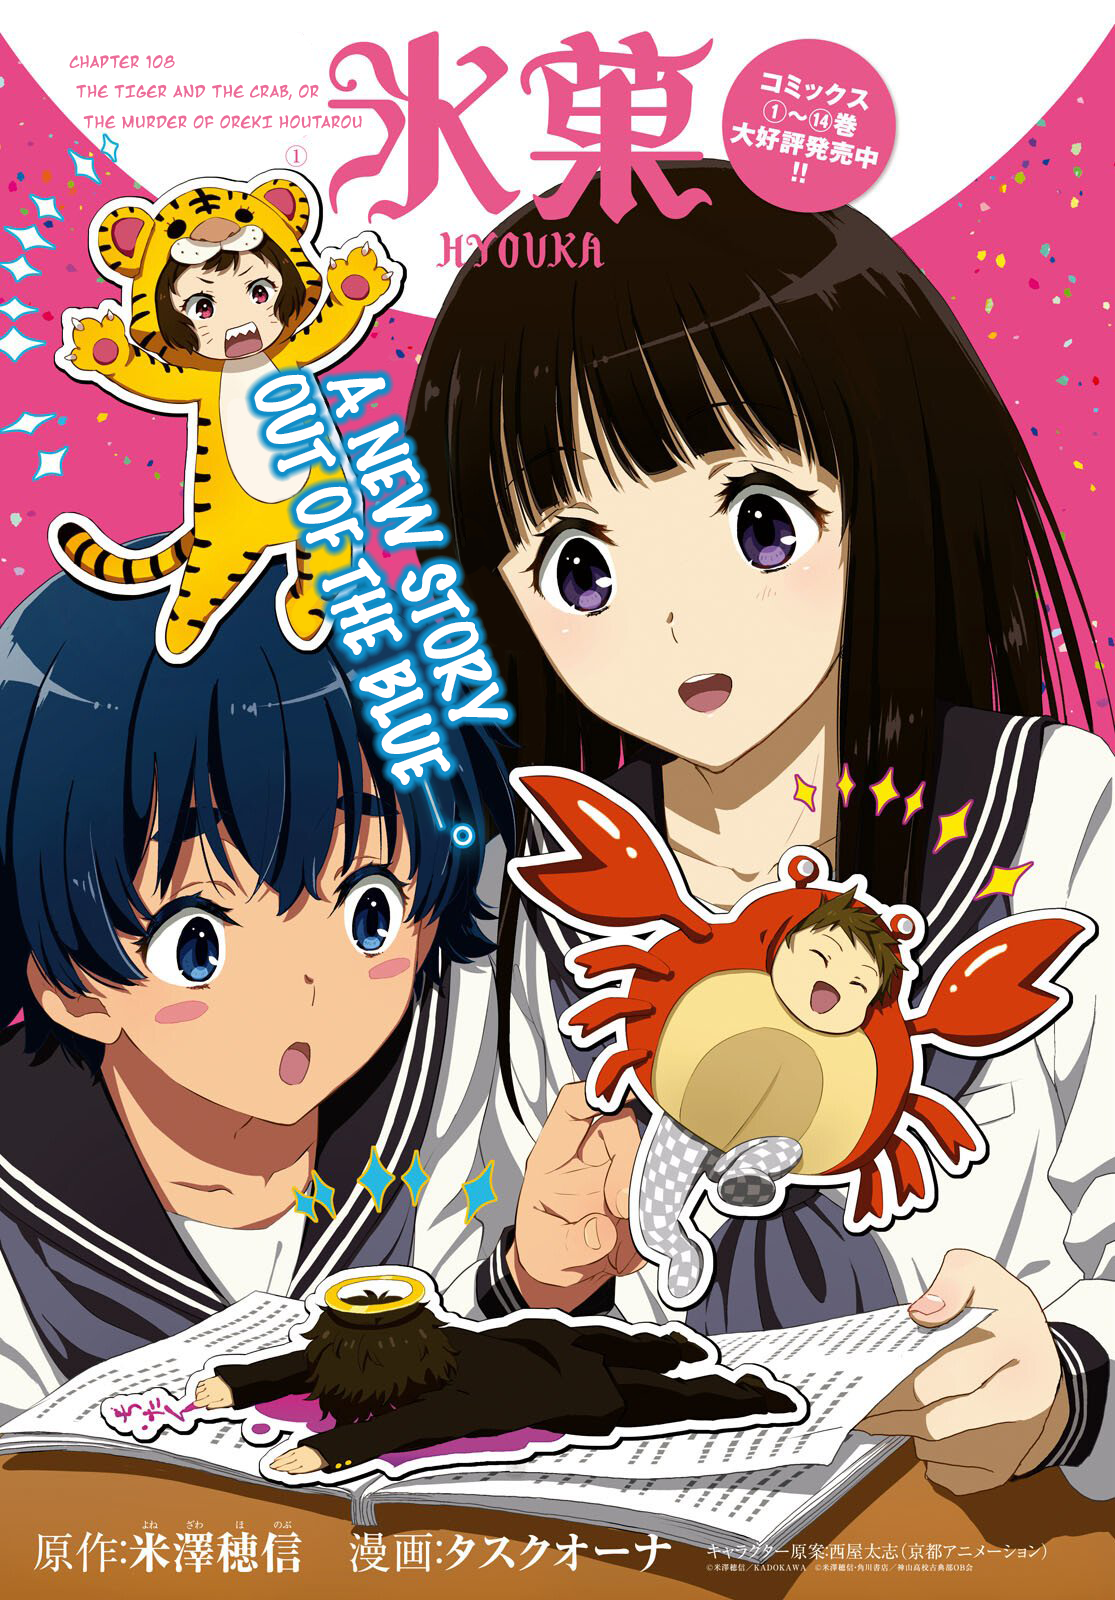 Hyouka, Chapter 108 - Hyouka Manga Online